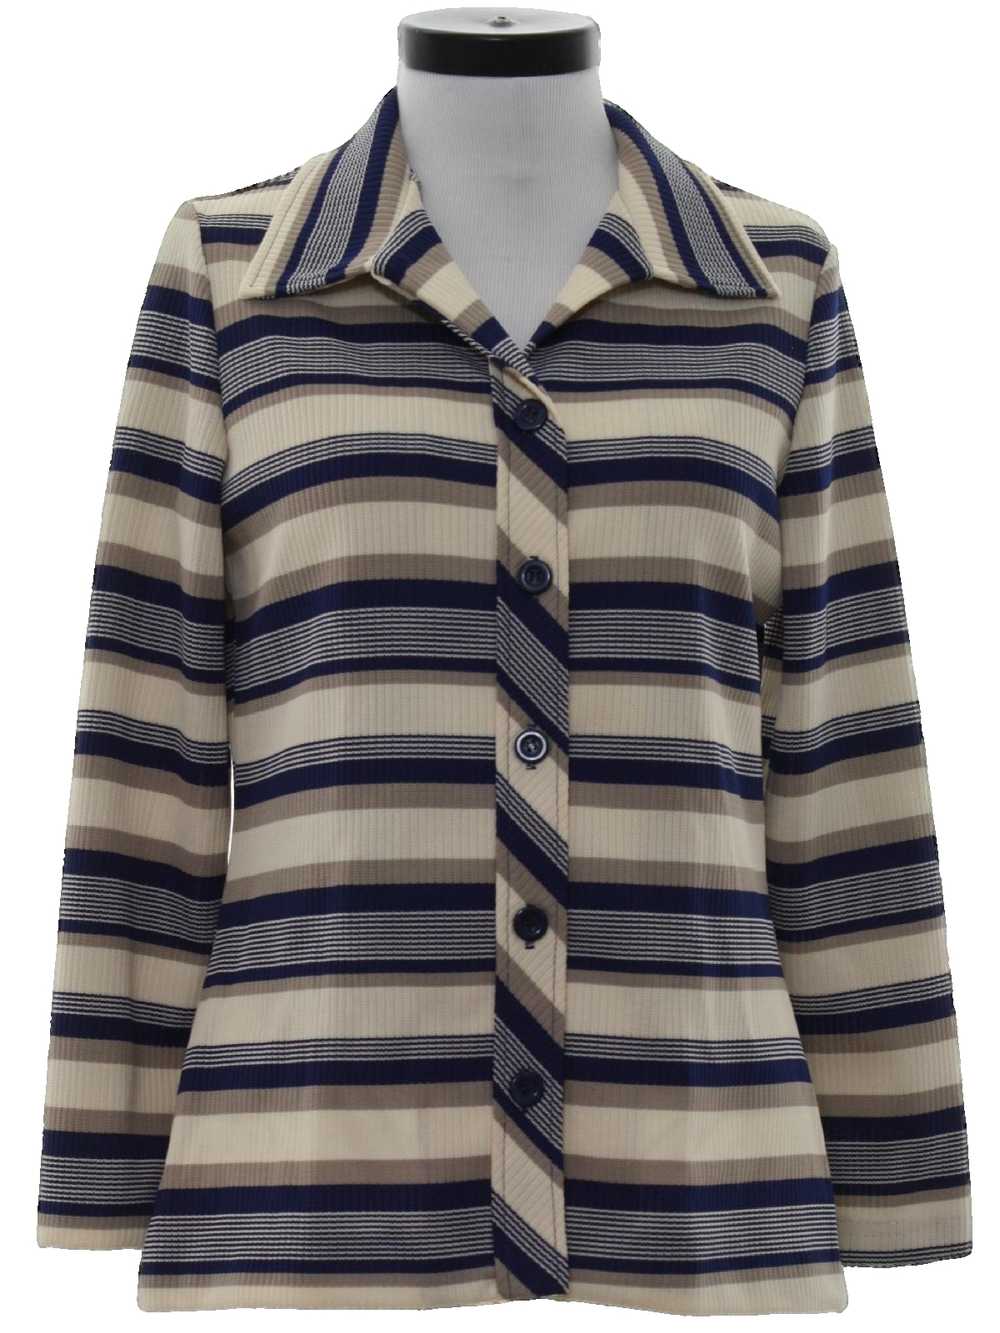 1970's Montgomery Ward Womens Knit Shirt - Gem